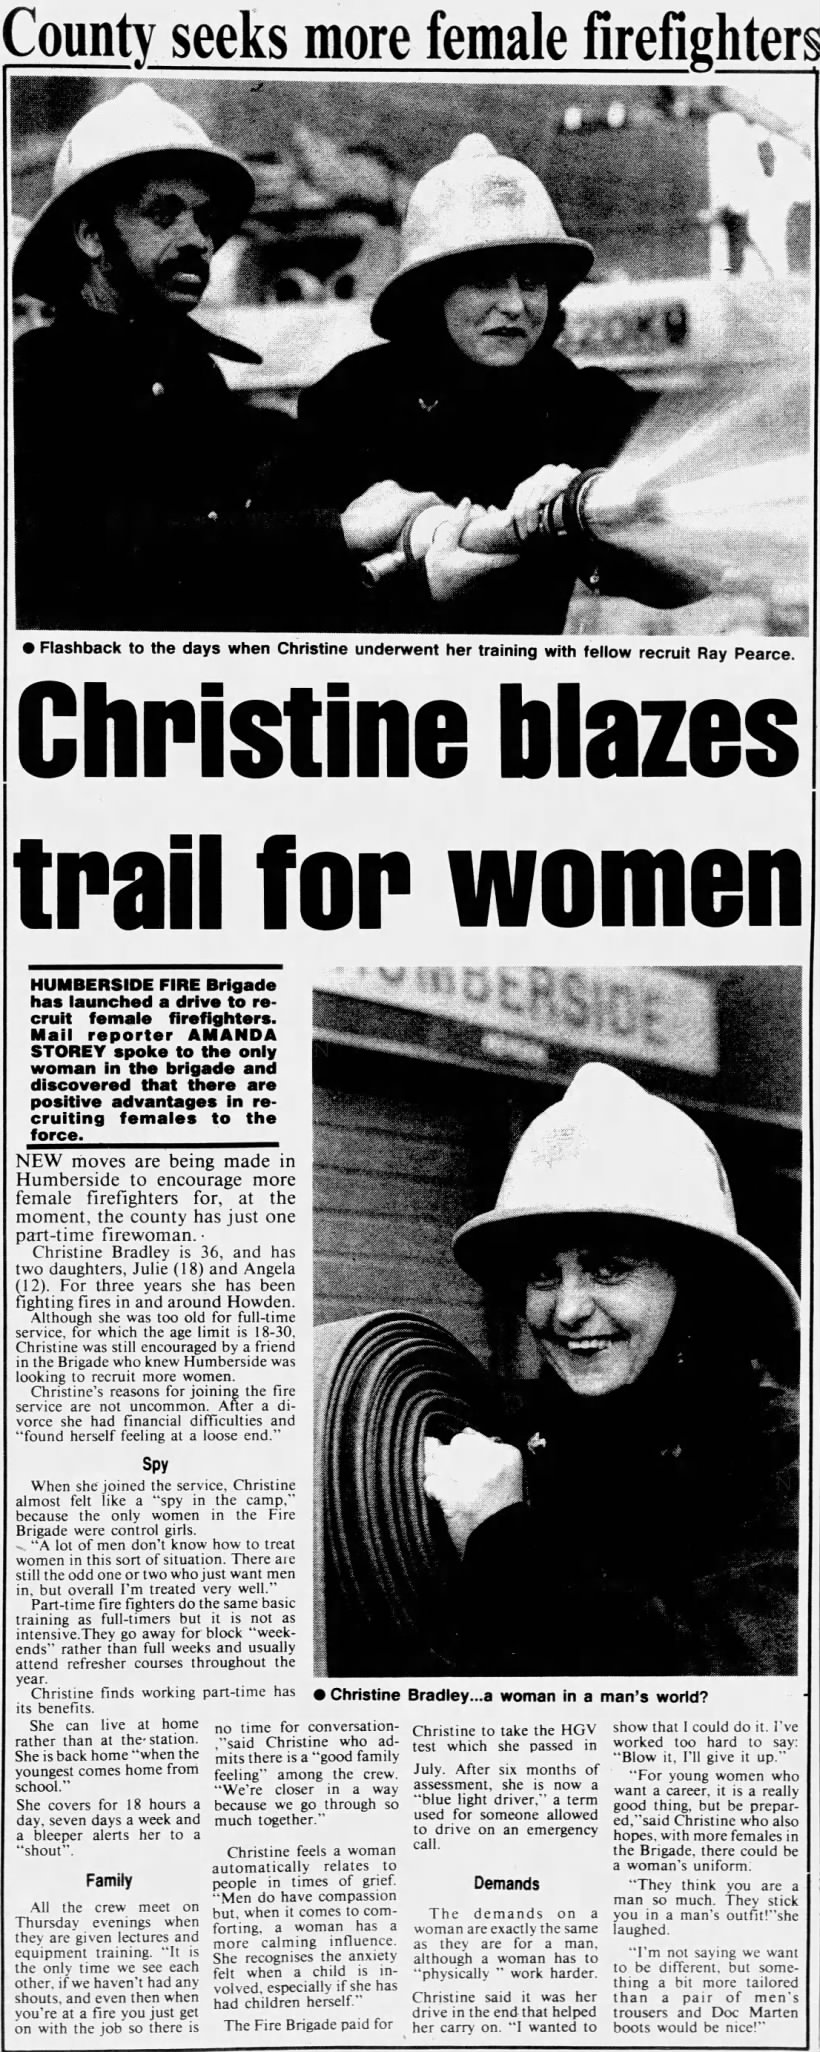 Christine blazes trail for women